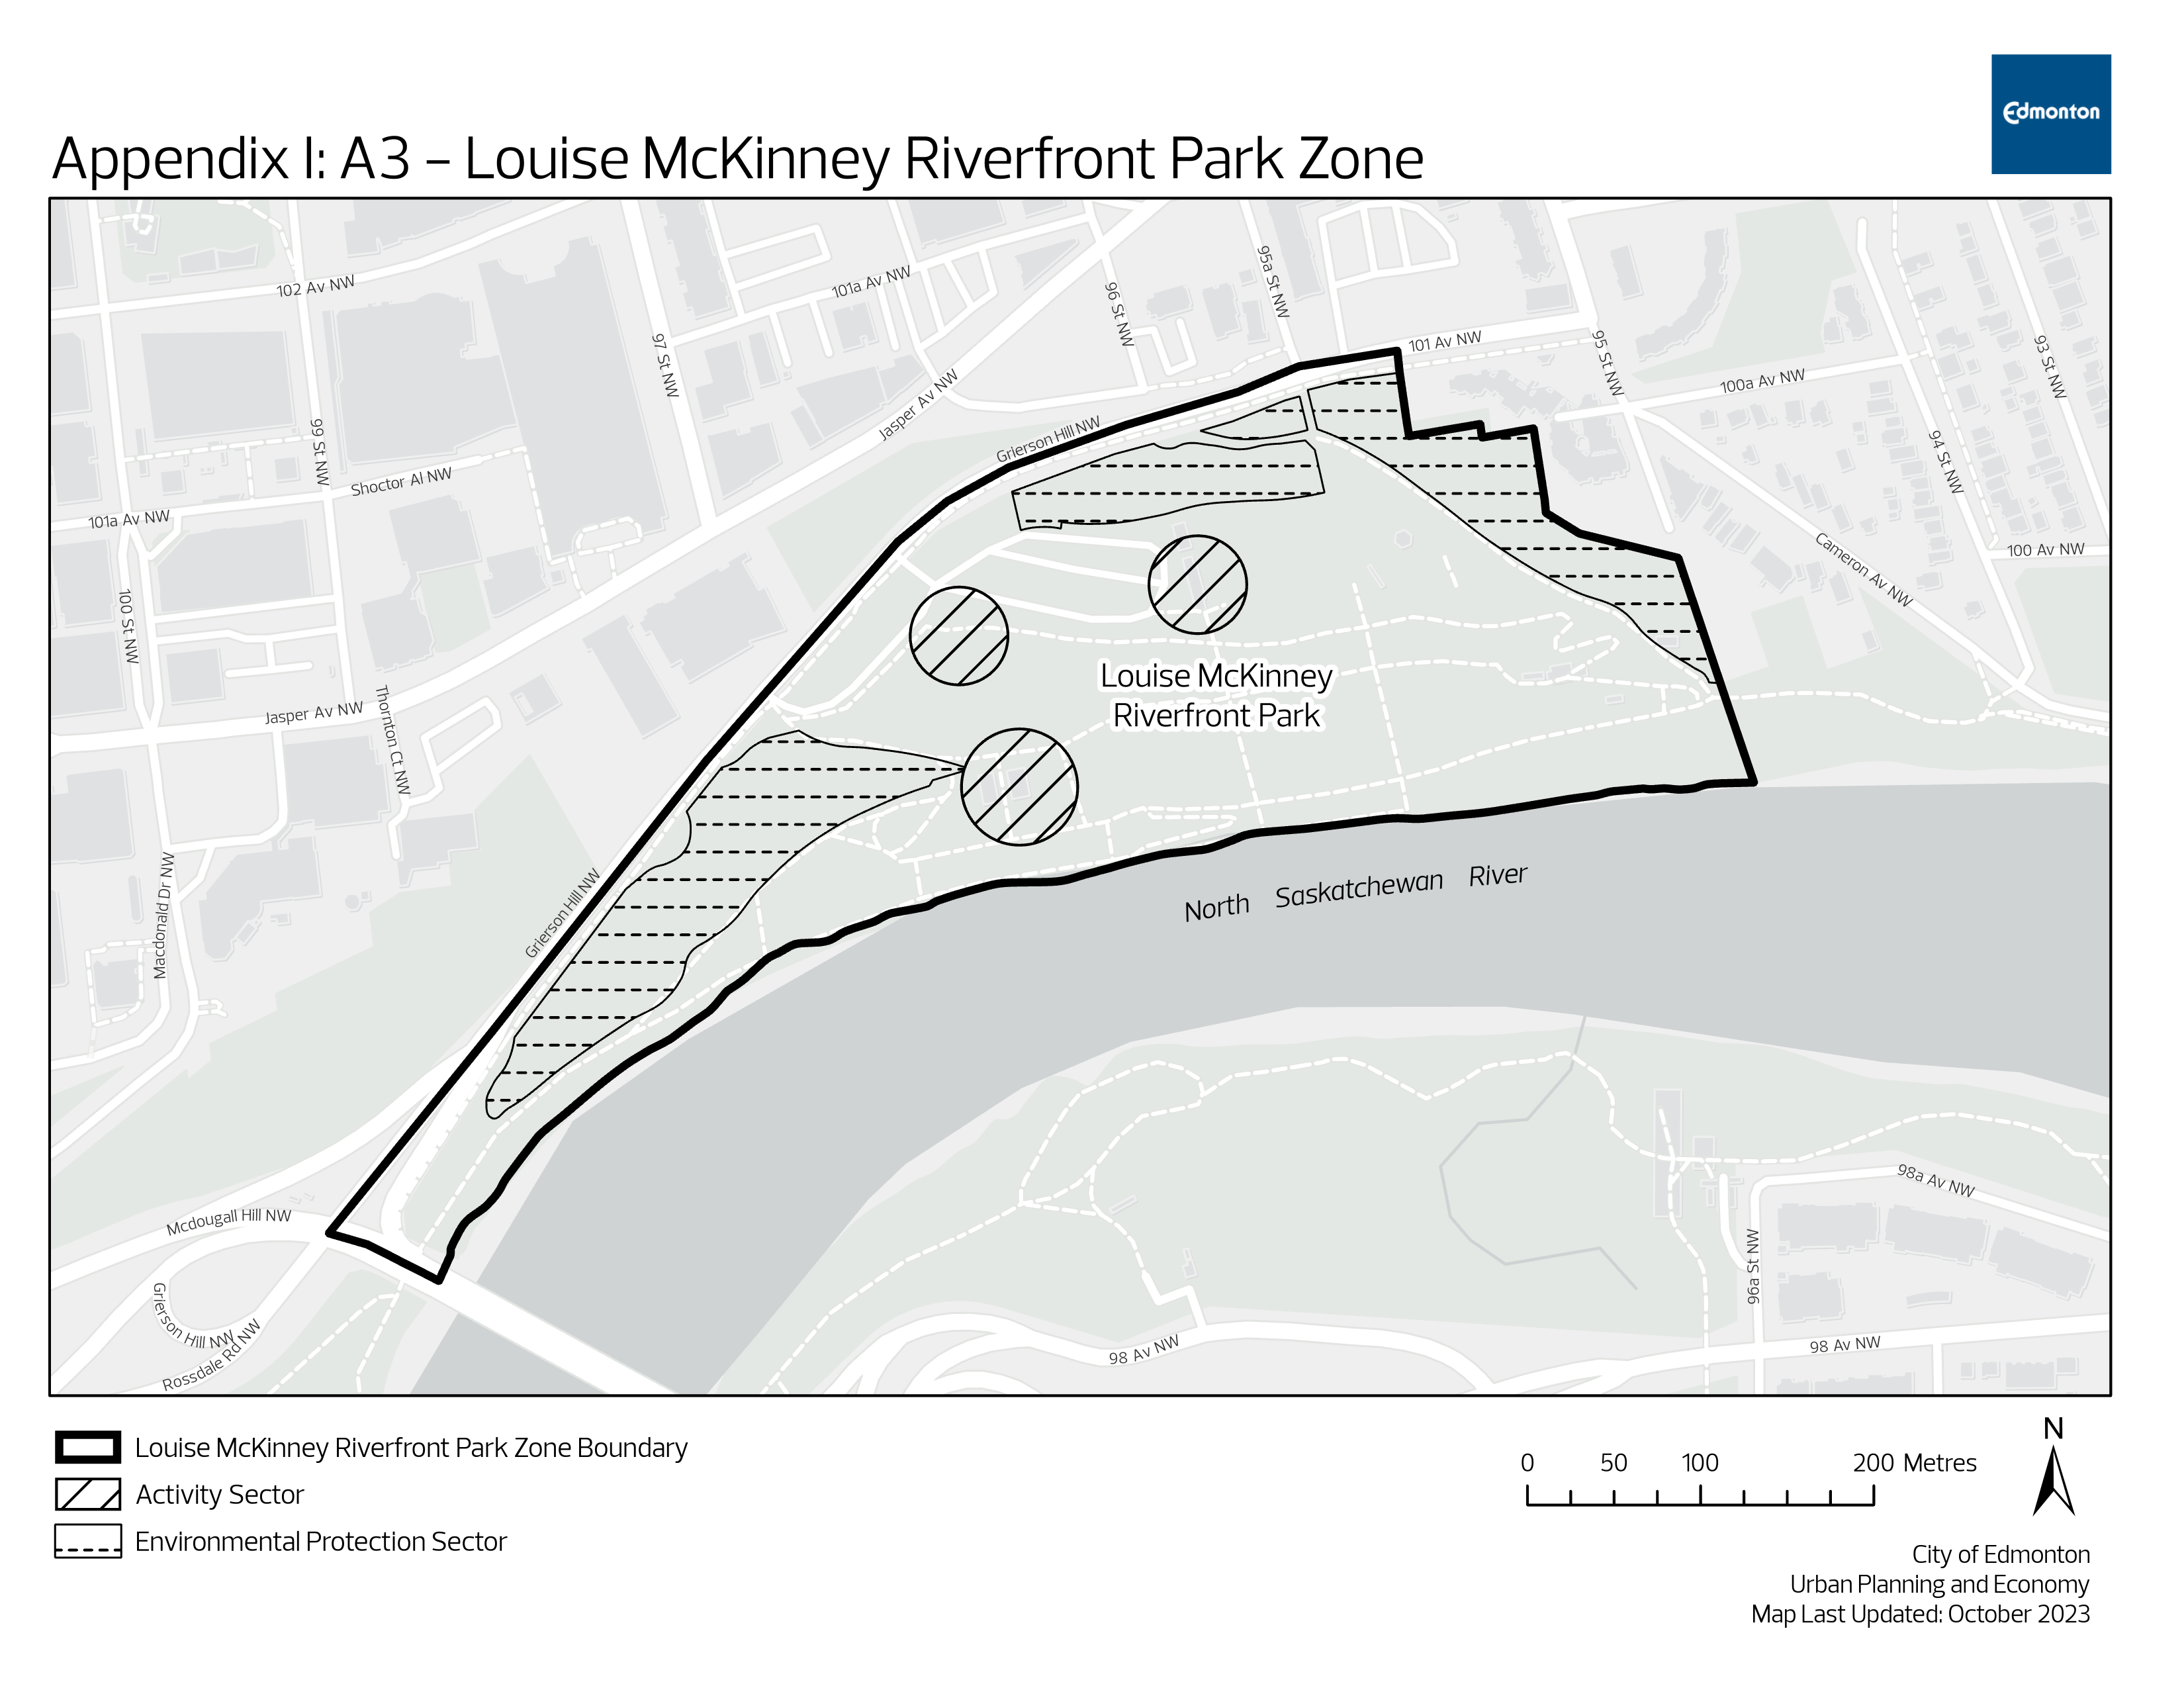 A3 - Louise McKinney Riverfront Park Zone map